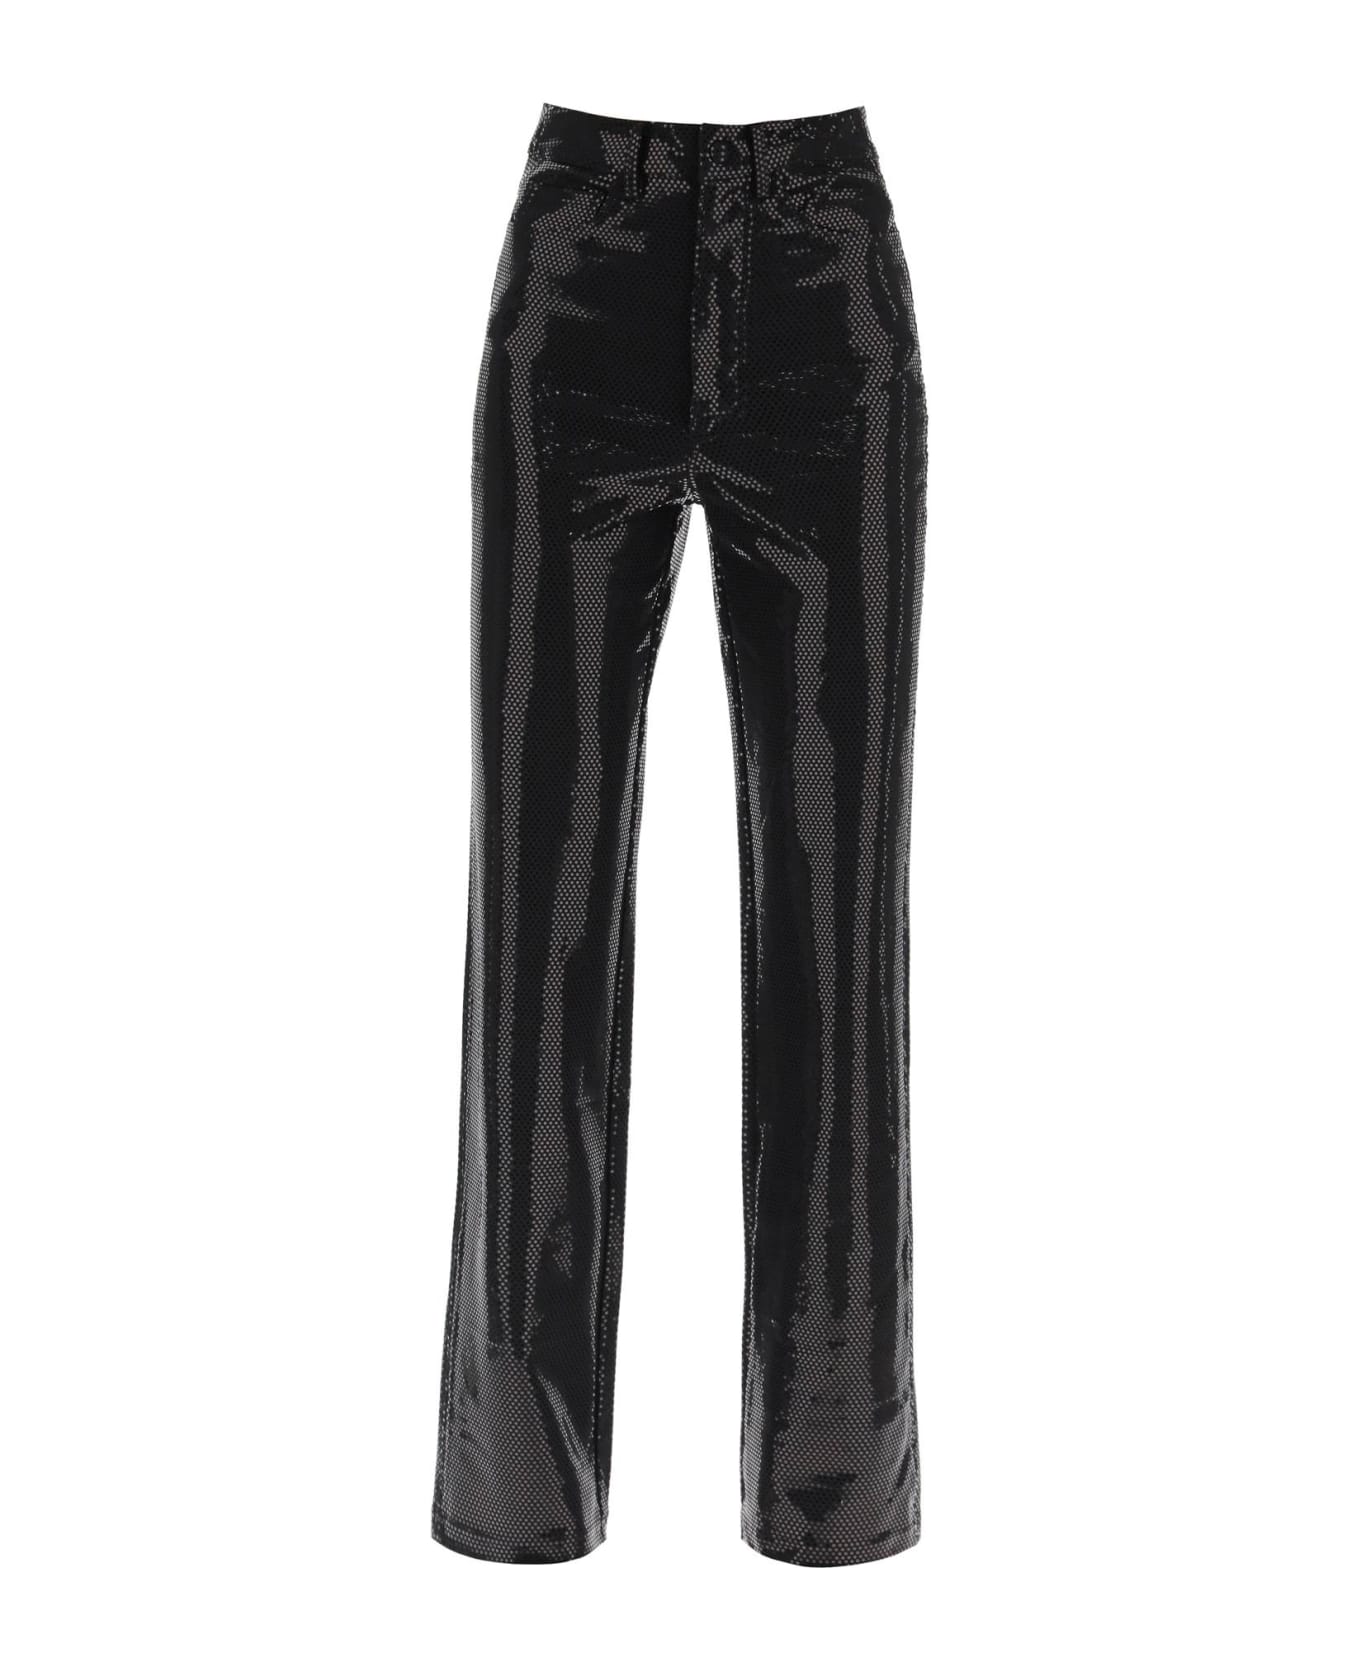 Rotate by Birger Christensen 'rotana' Foil Jersey Pants - BLACK (Black) ボトムス